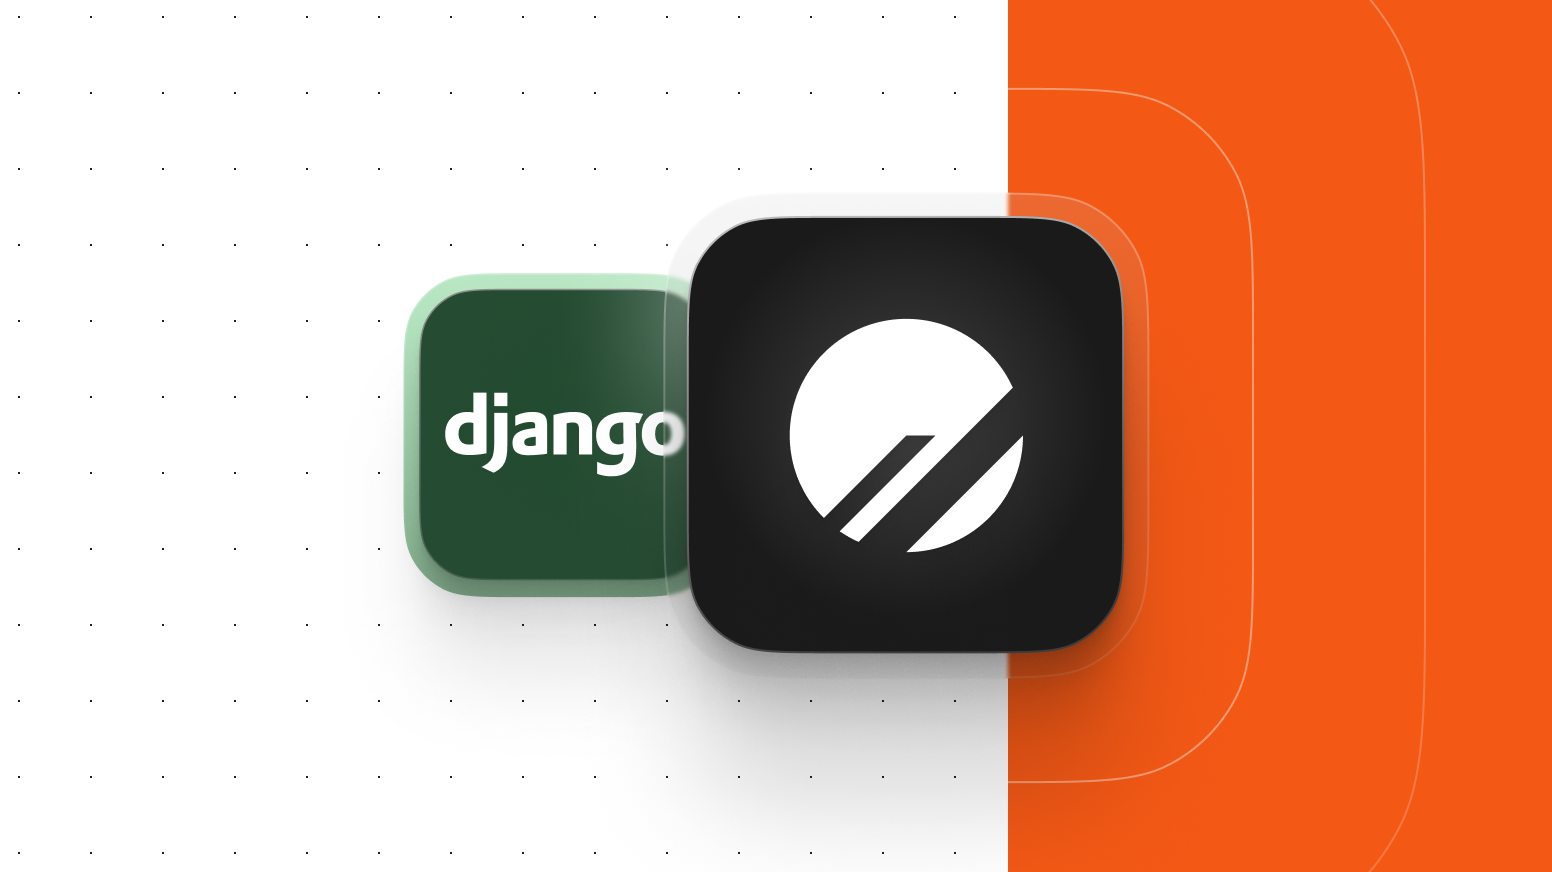 Replace your Django database with PlanetScale